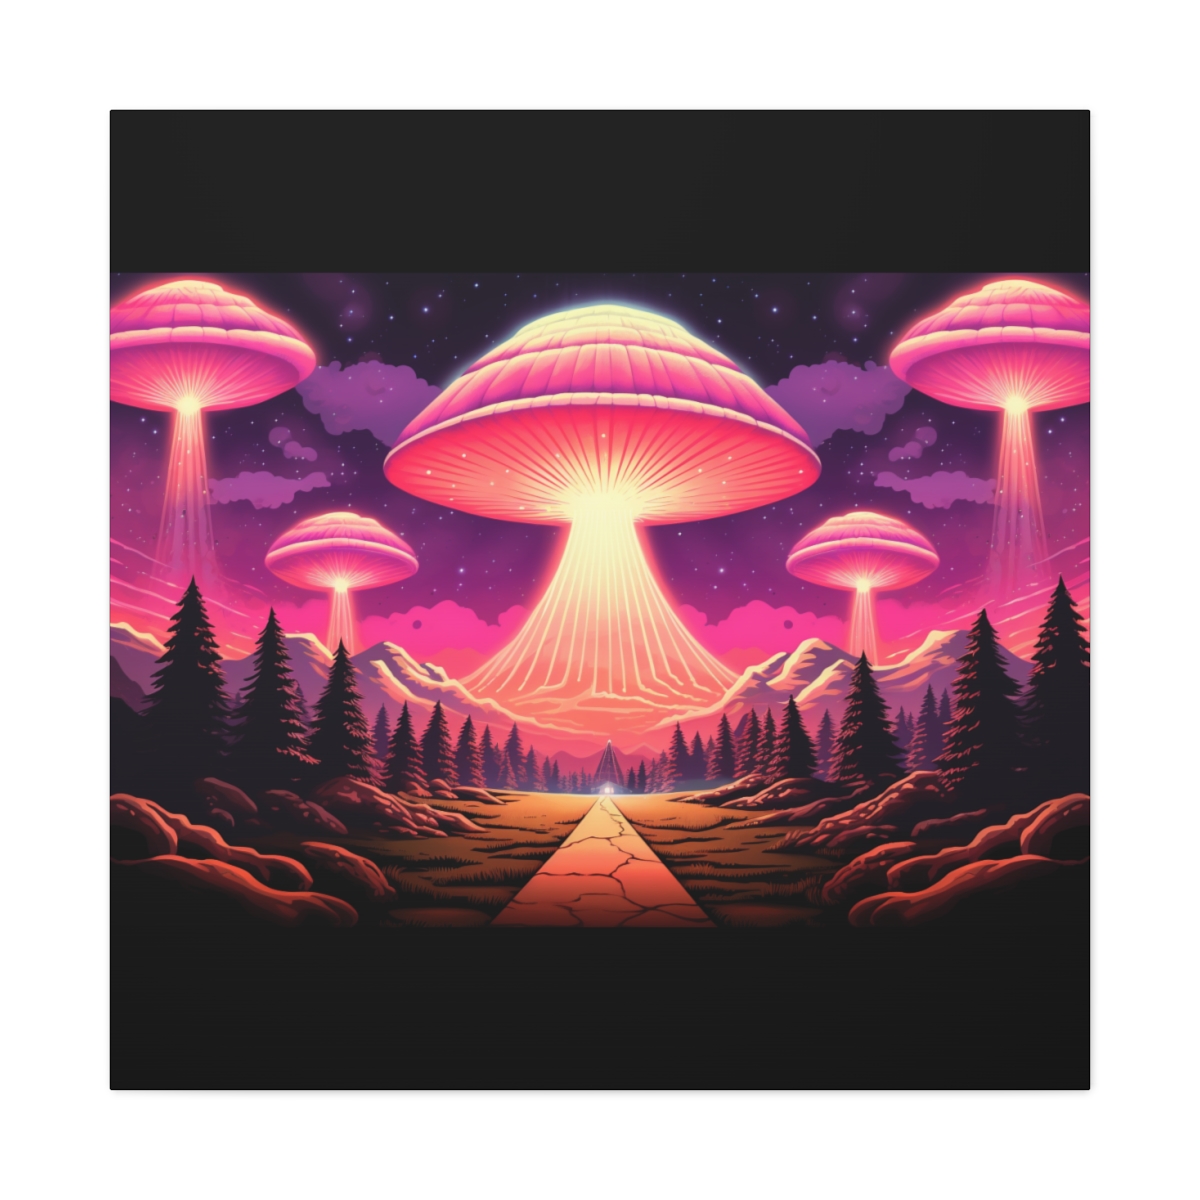 Fantasy Trippy Mushroom Art: Amazing World Of Fungi